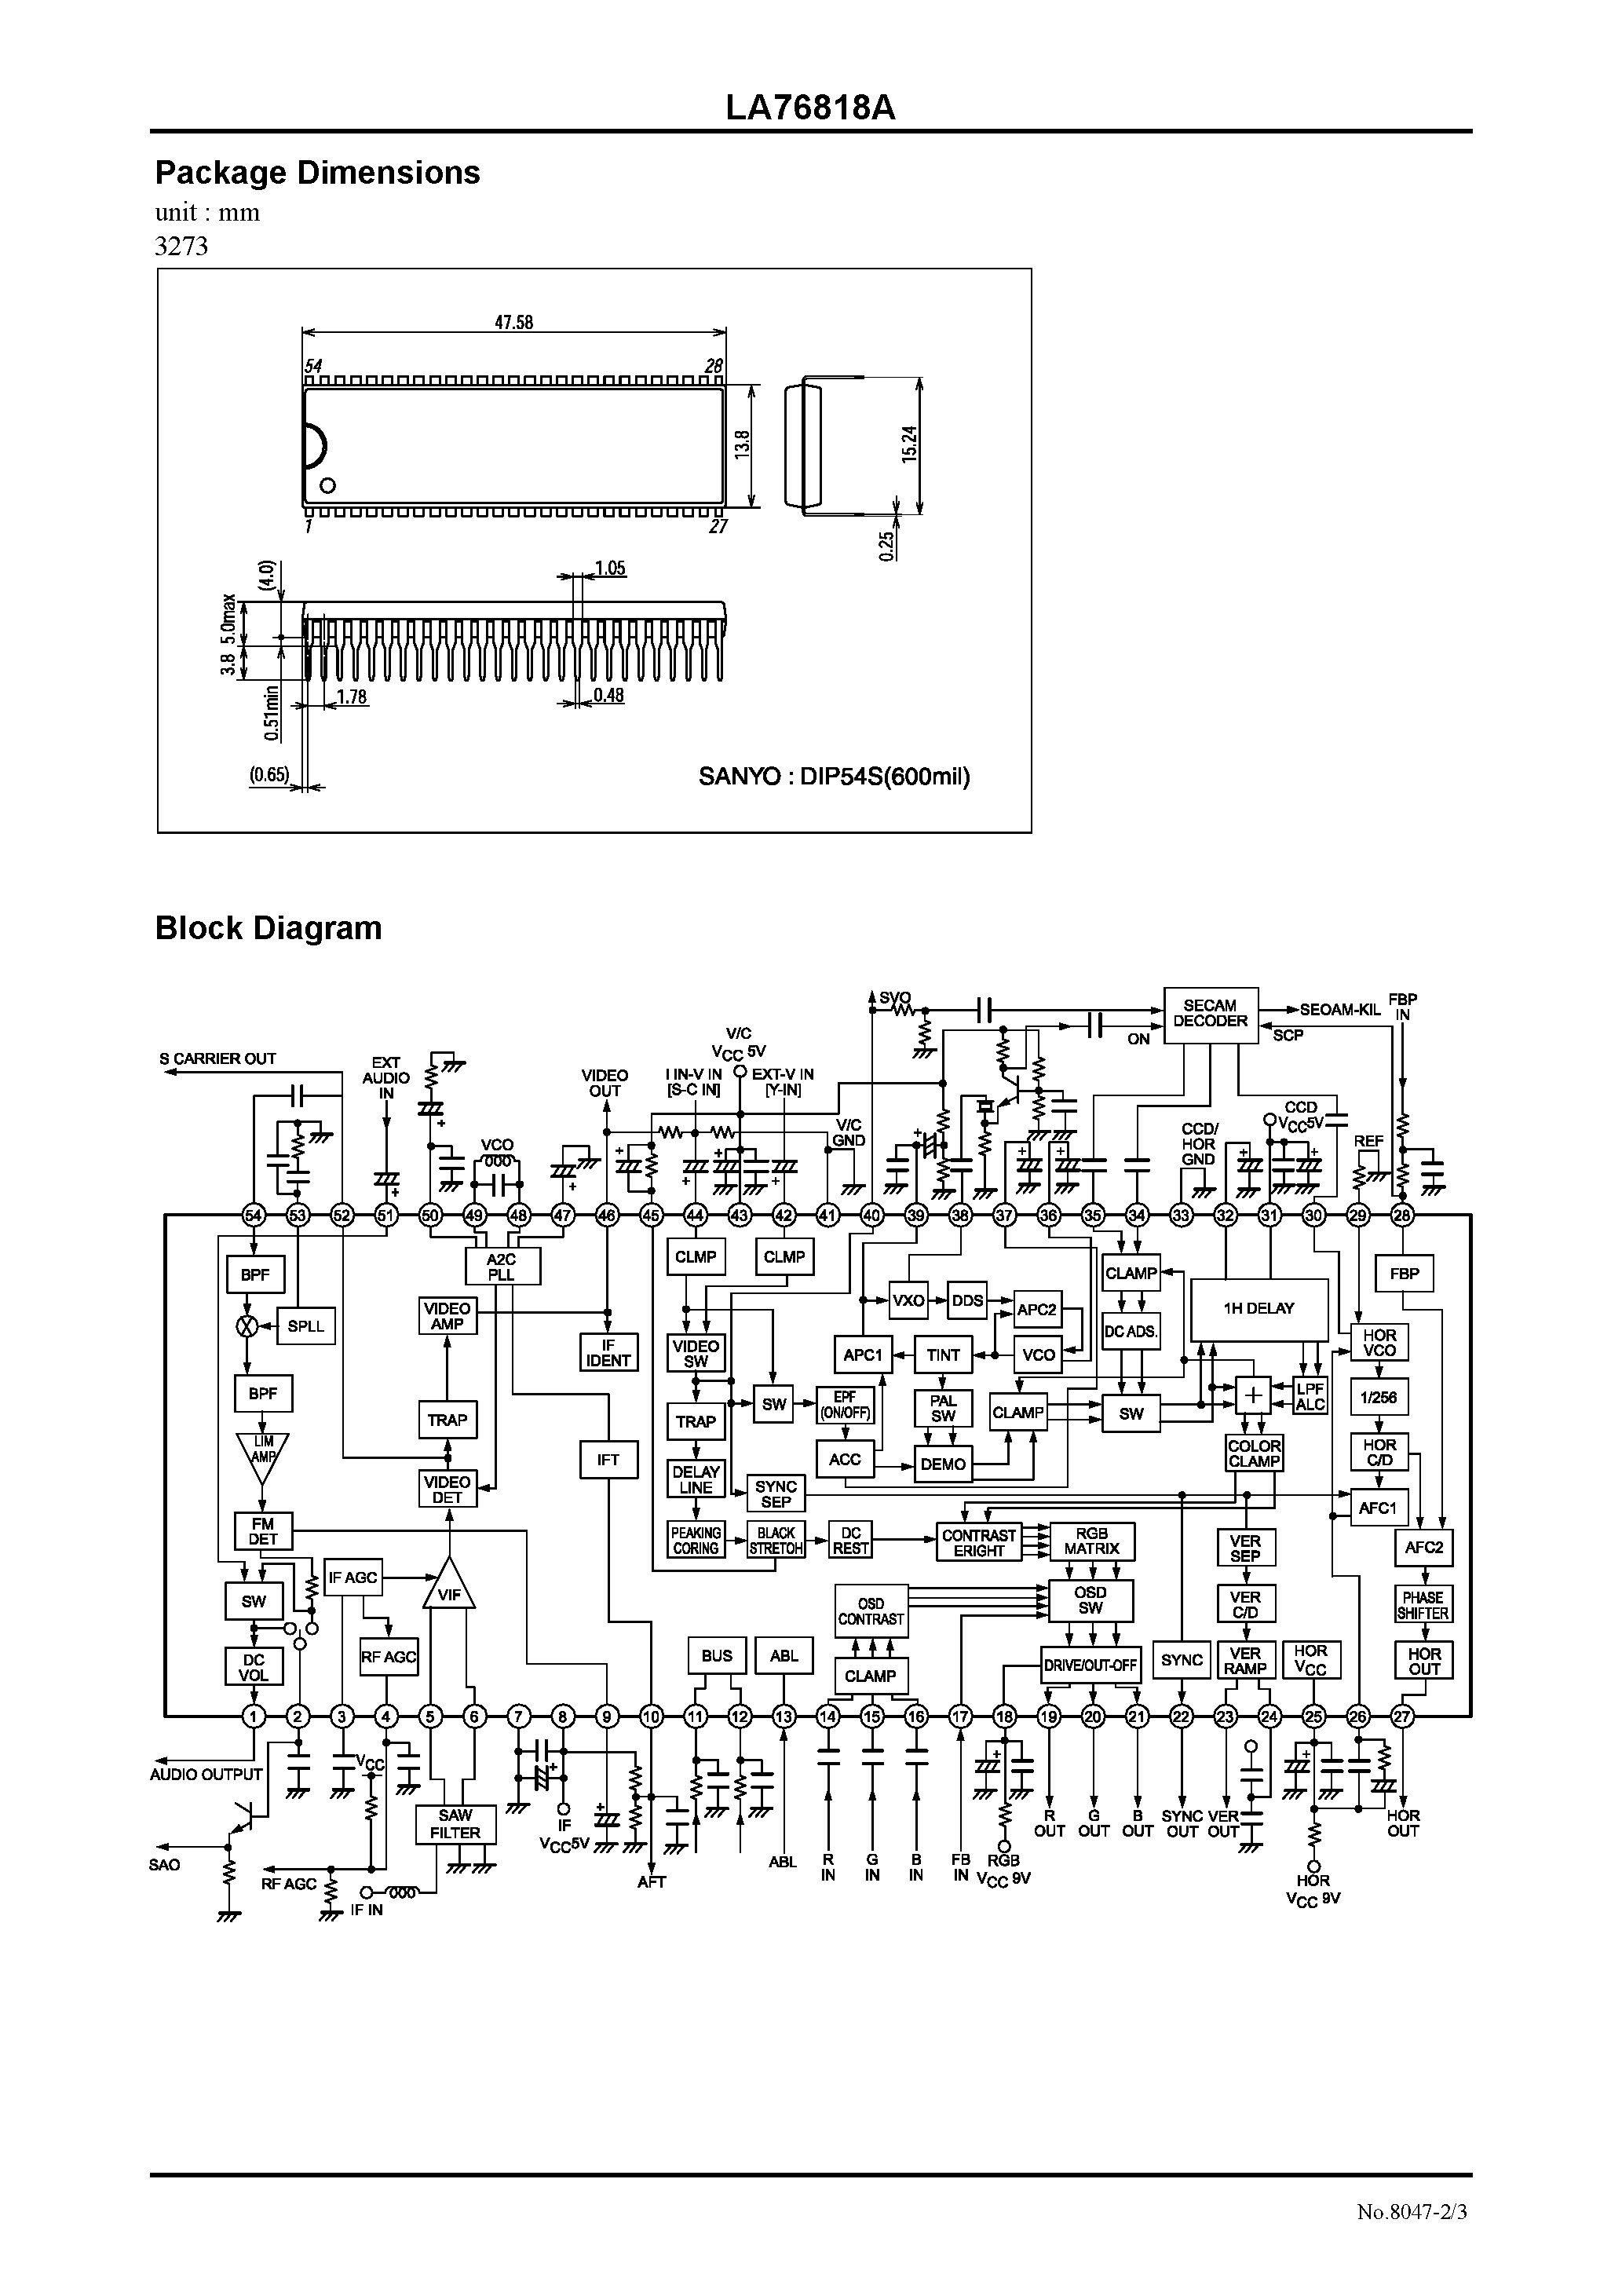 Datasheet LA76818A - Monolithic Linear IC / I2C Bus Control IC page 2